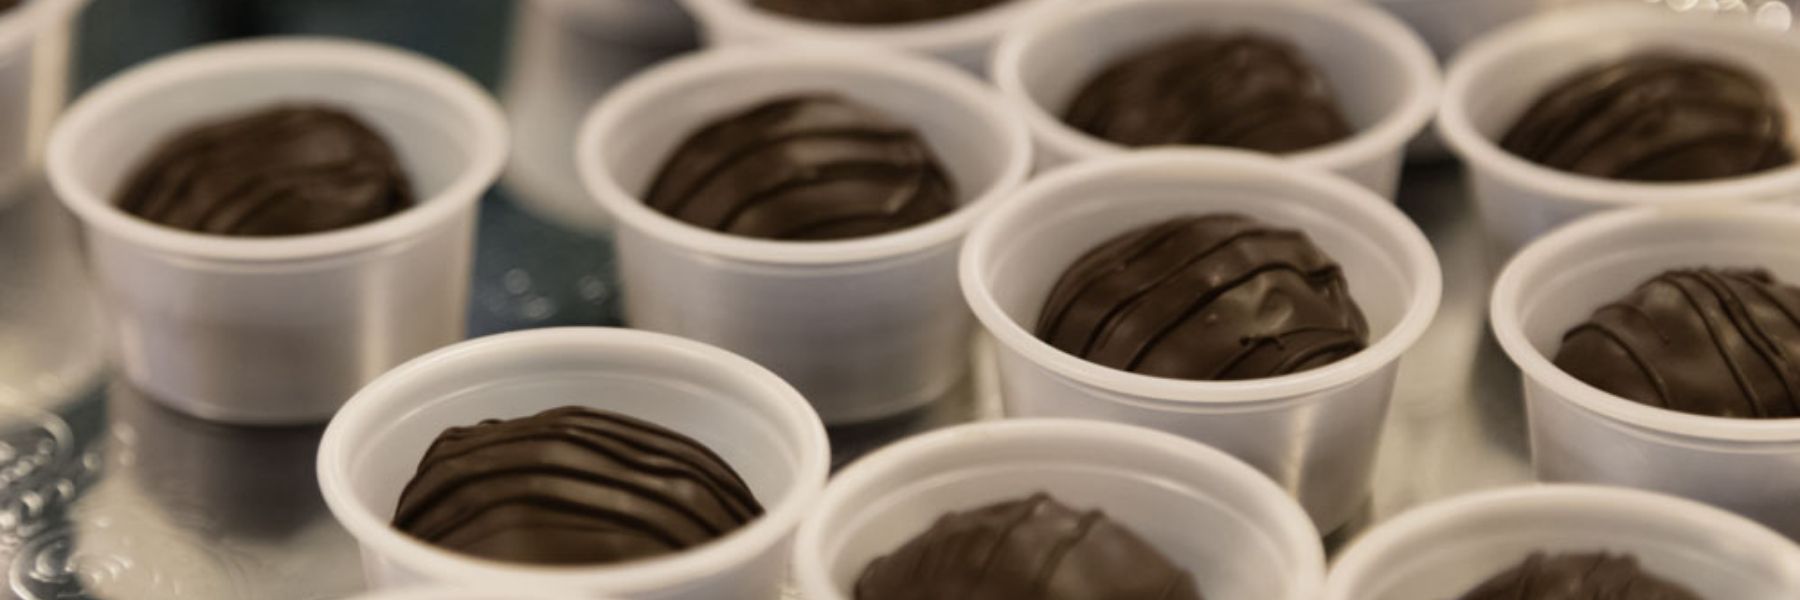 Dilettante Chocolates chocolate Ephemere Truffles in Sample Cups